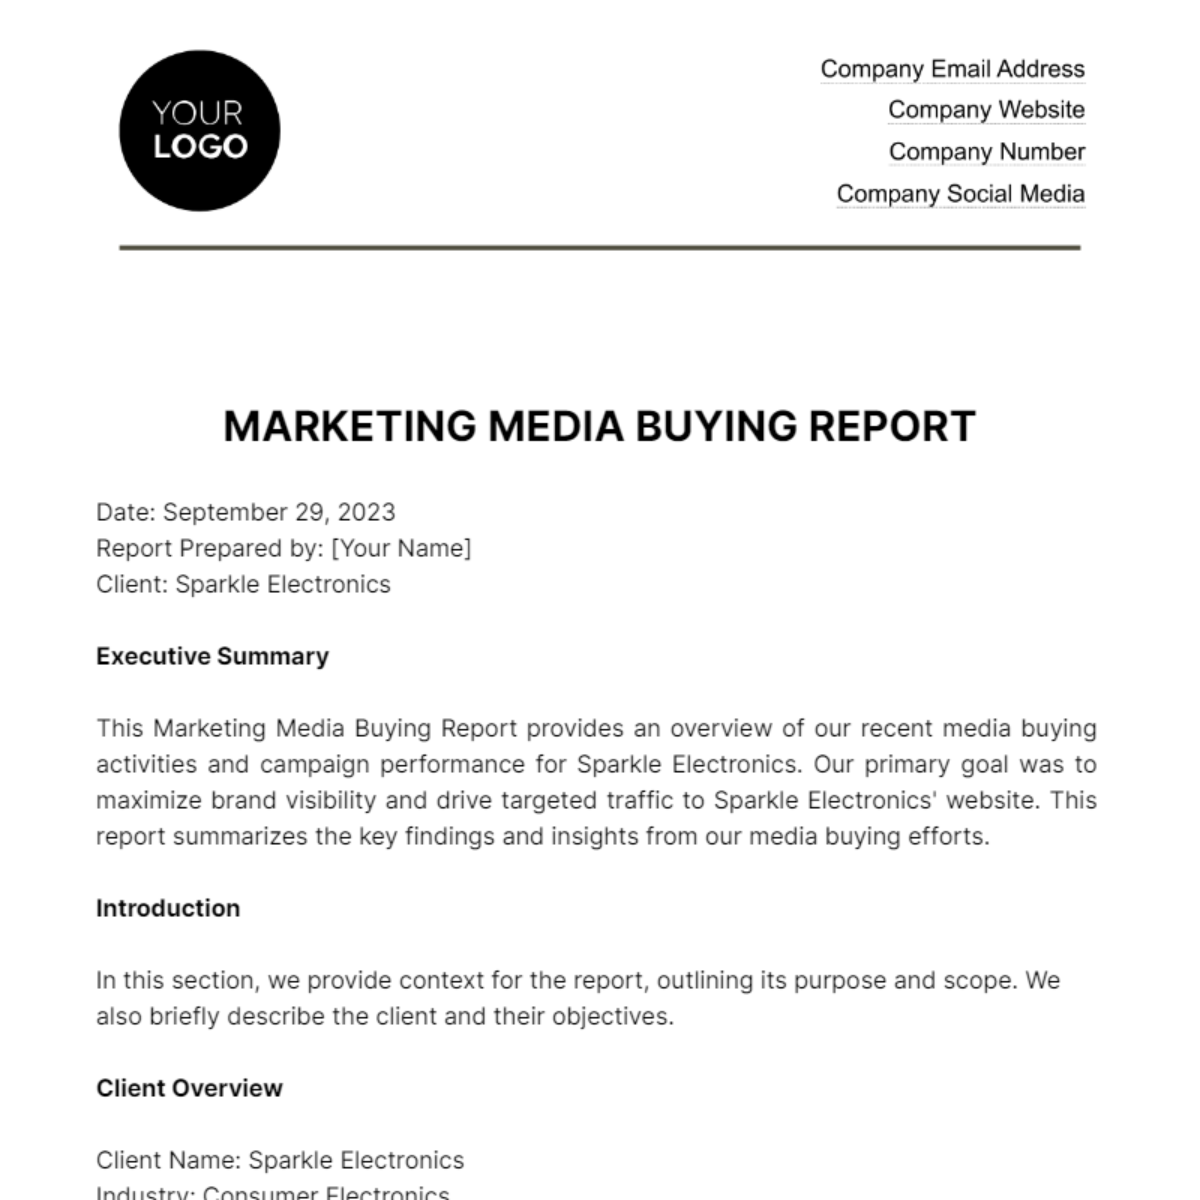 Marketing Media Buying Report Template